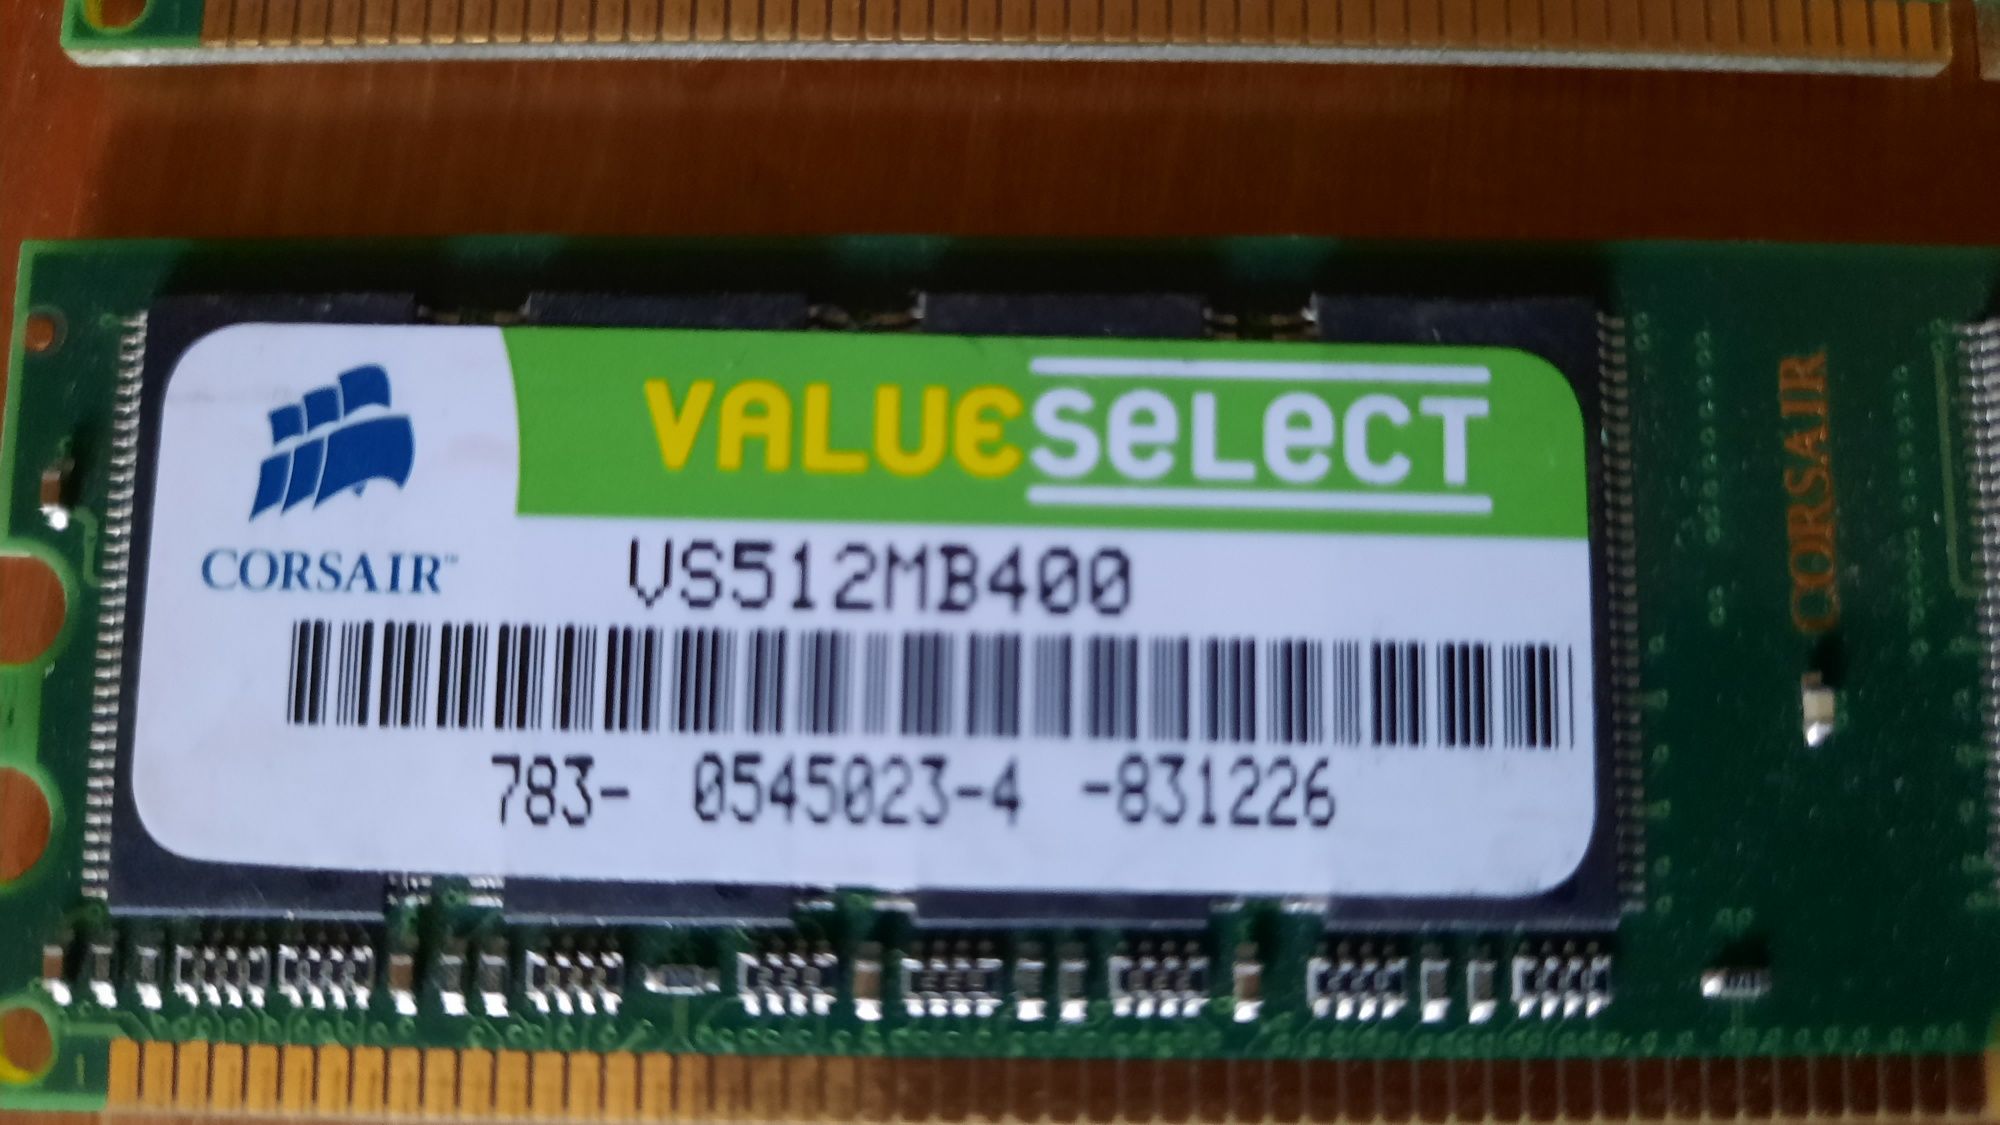 DDR2 pamięć RAM CORSAIR VS512MB400 1GB - 2 kości